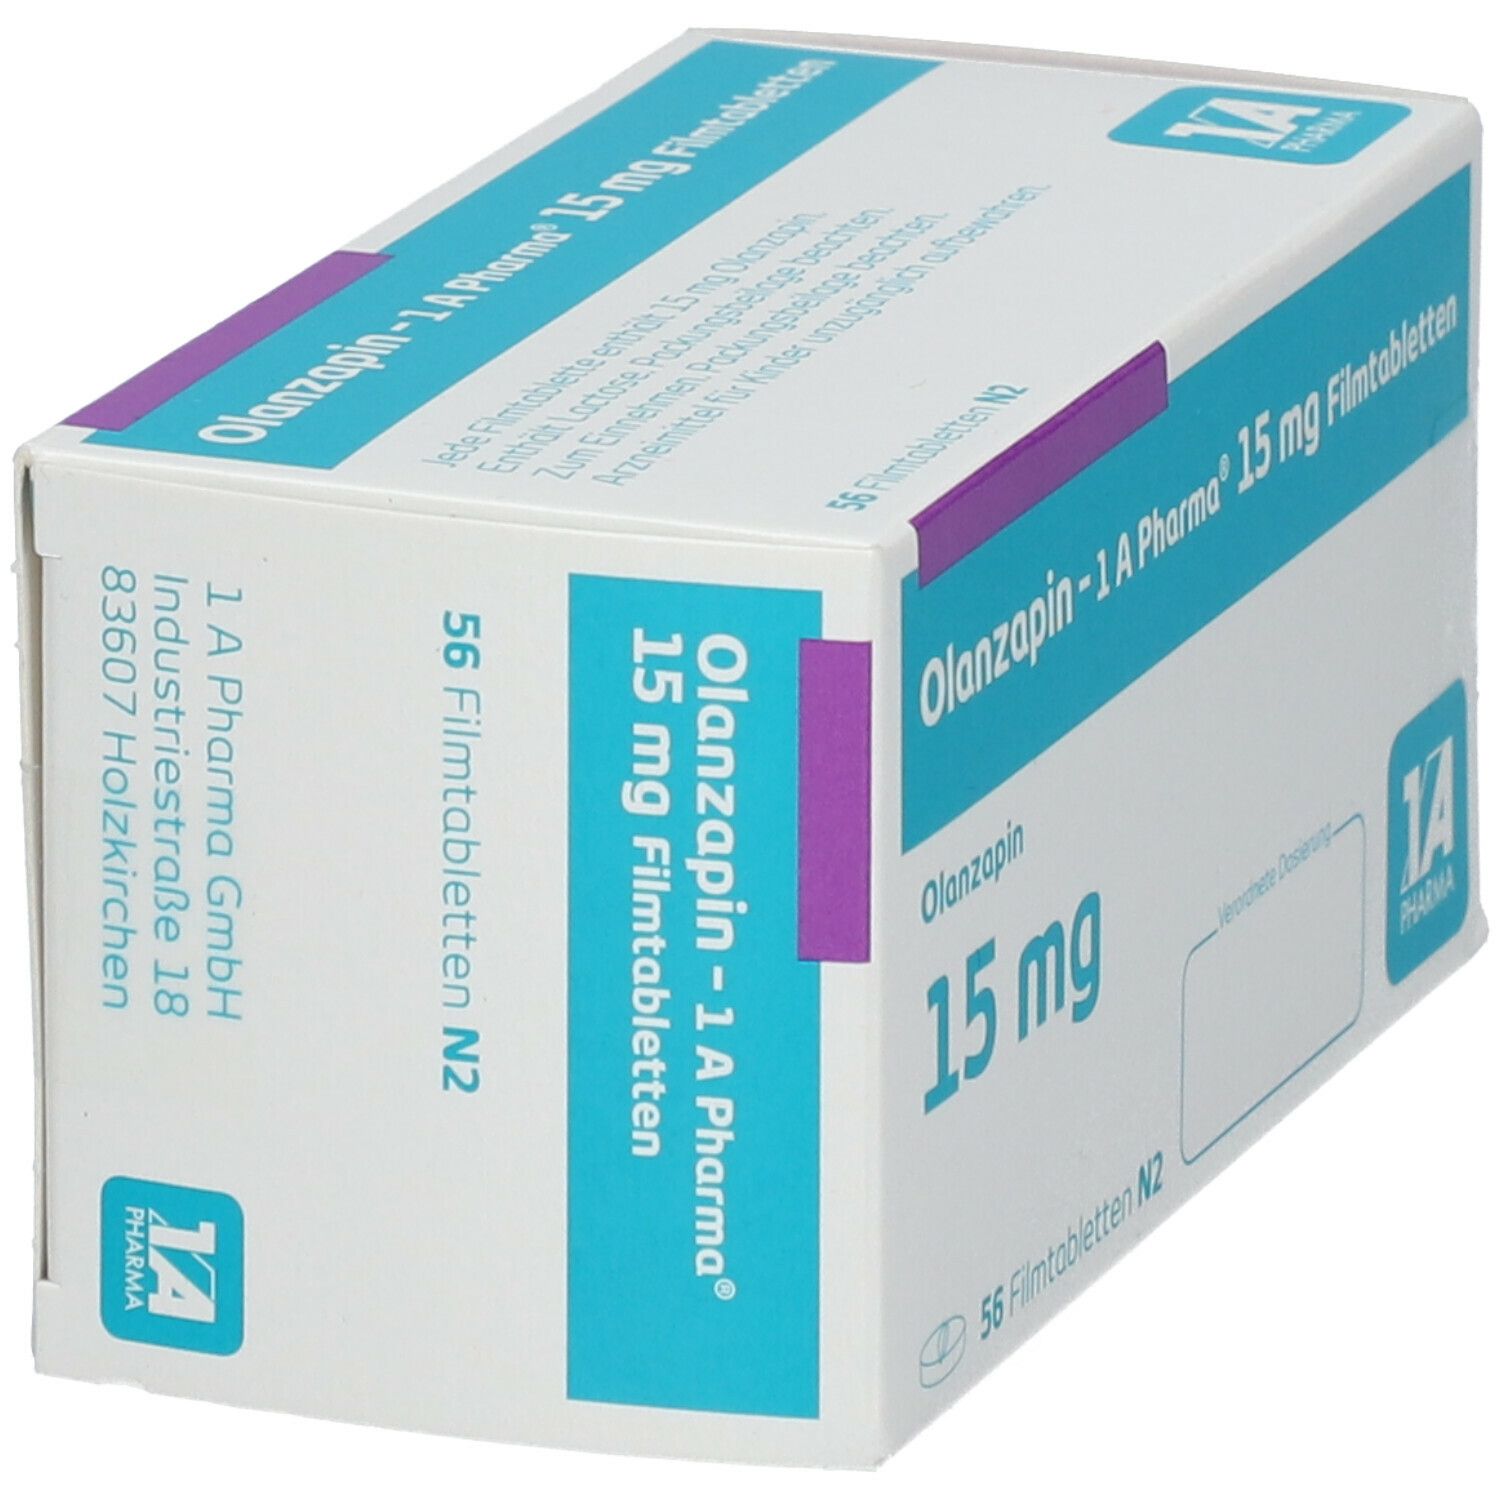 Olanzapin - 1 A Pharma® 15 mg